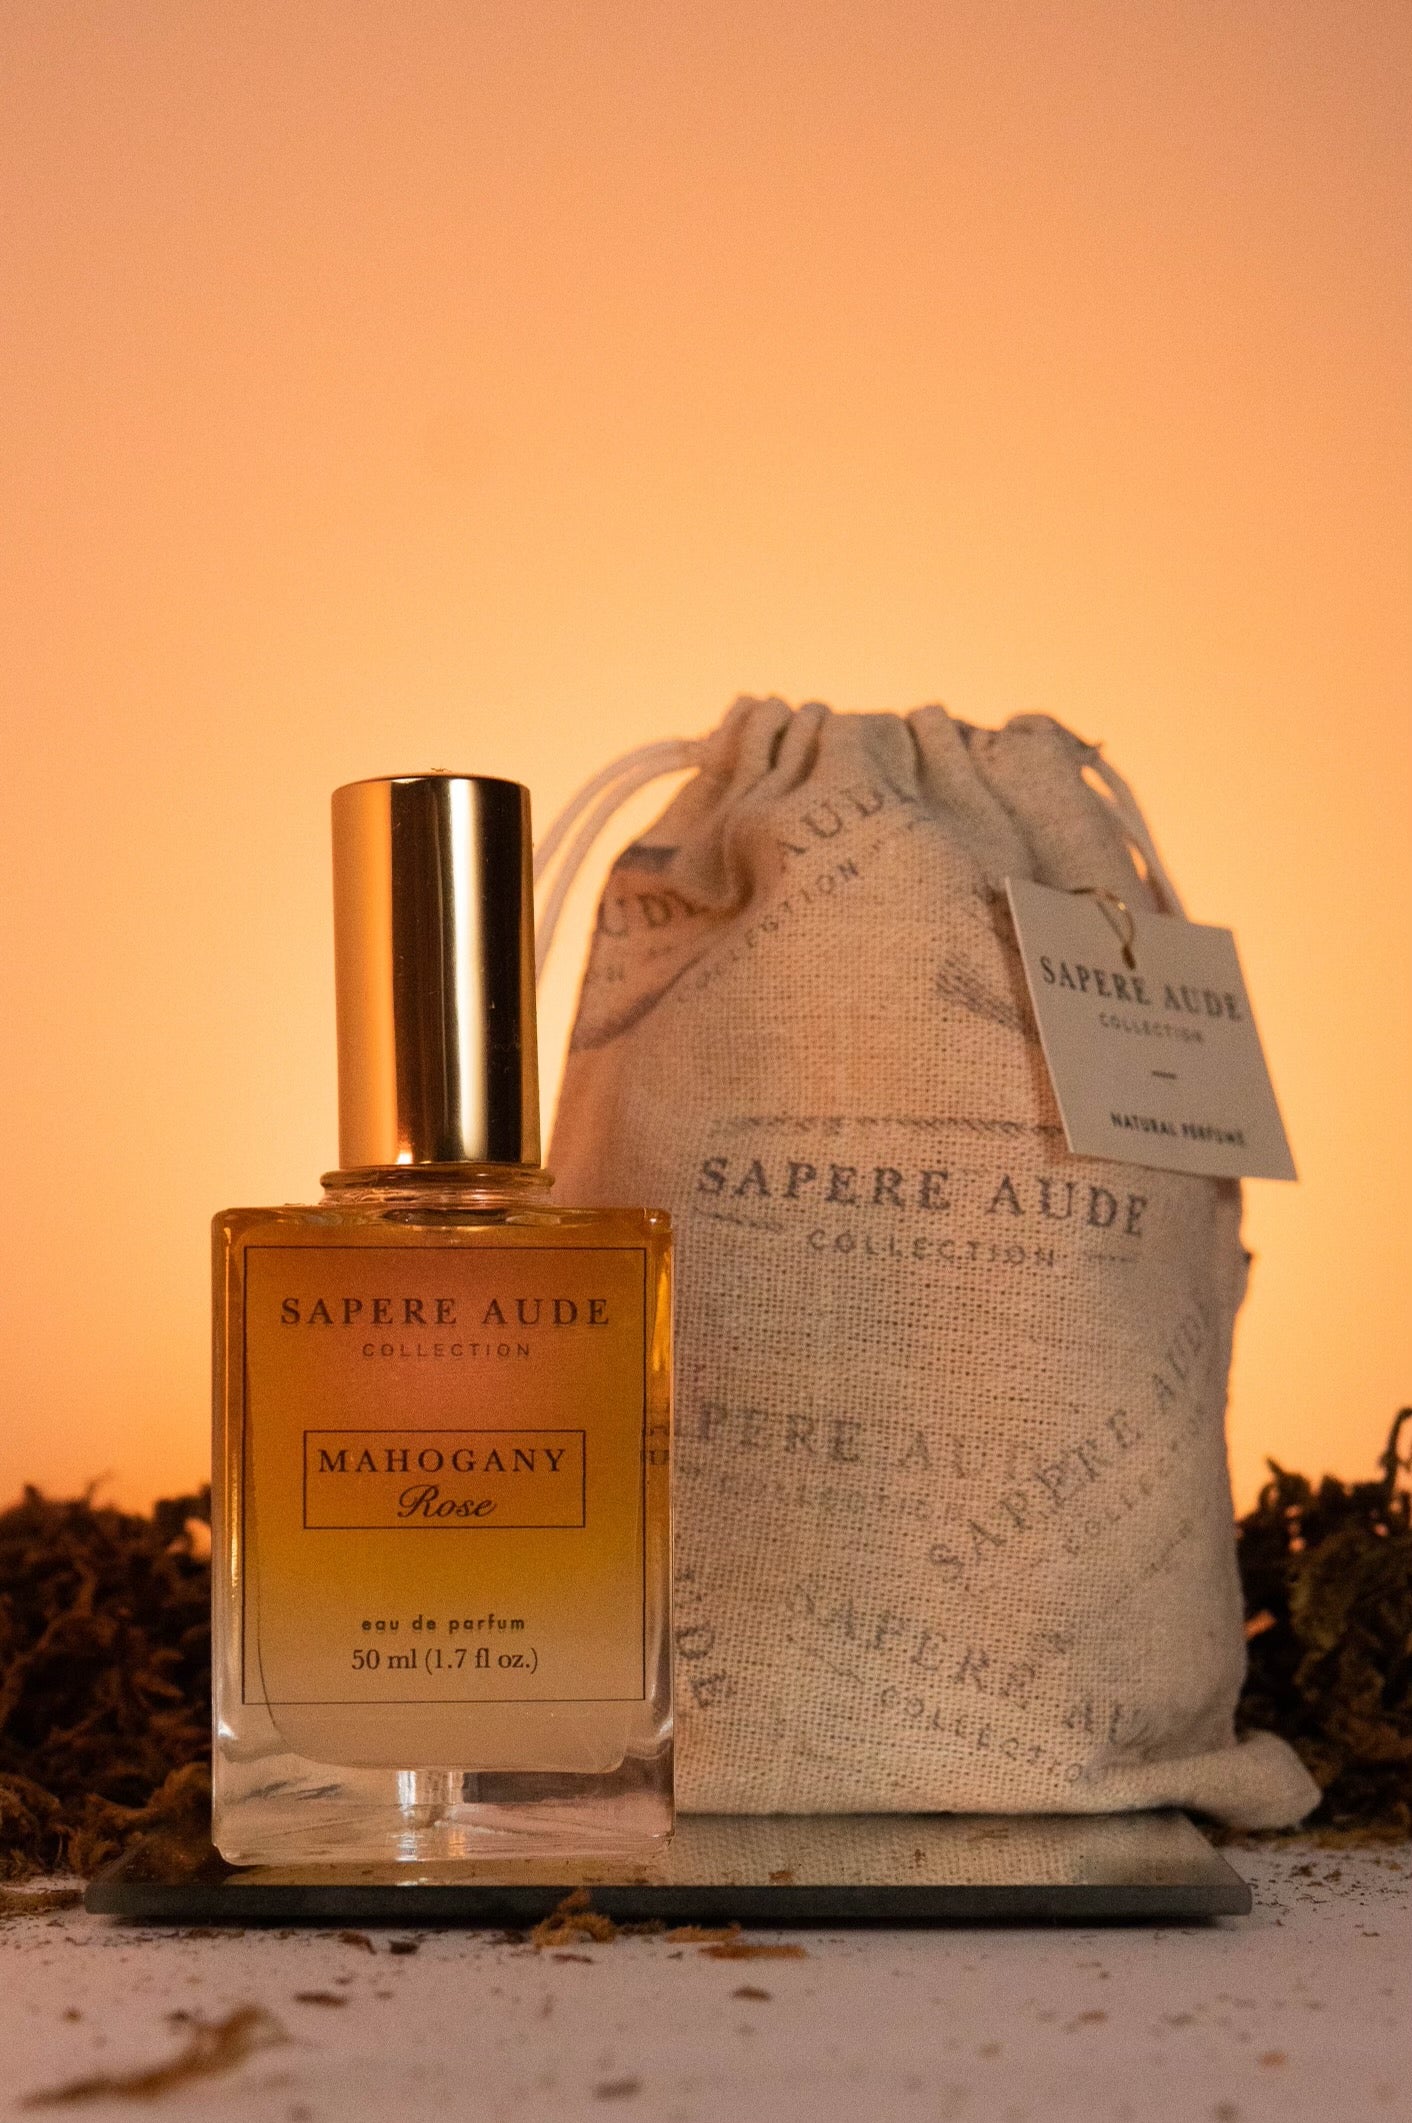 California Dream Mahogany perfume - a fragrance for women 2020